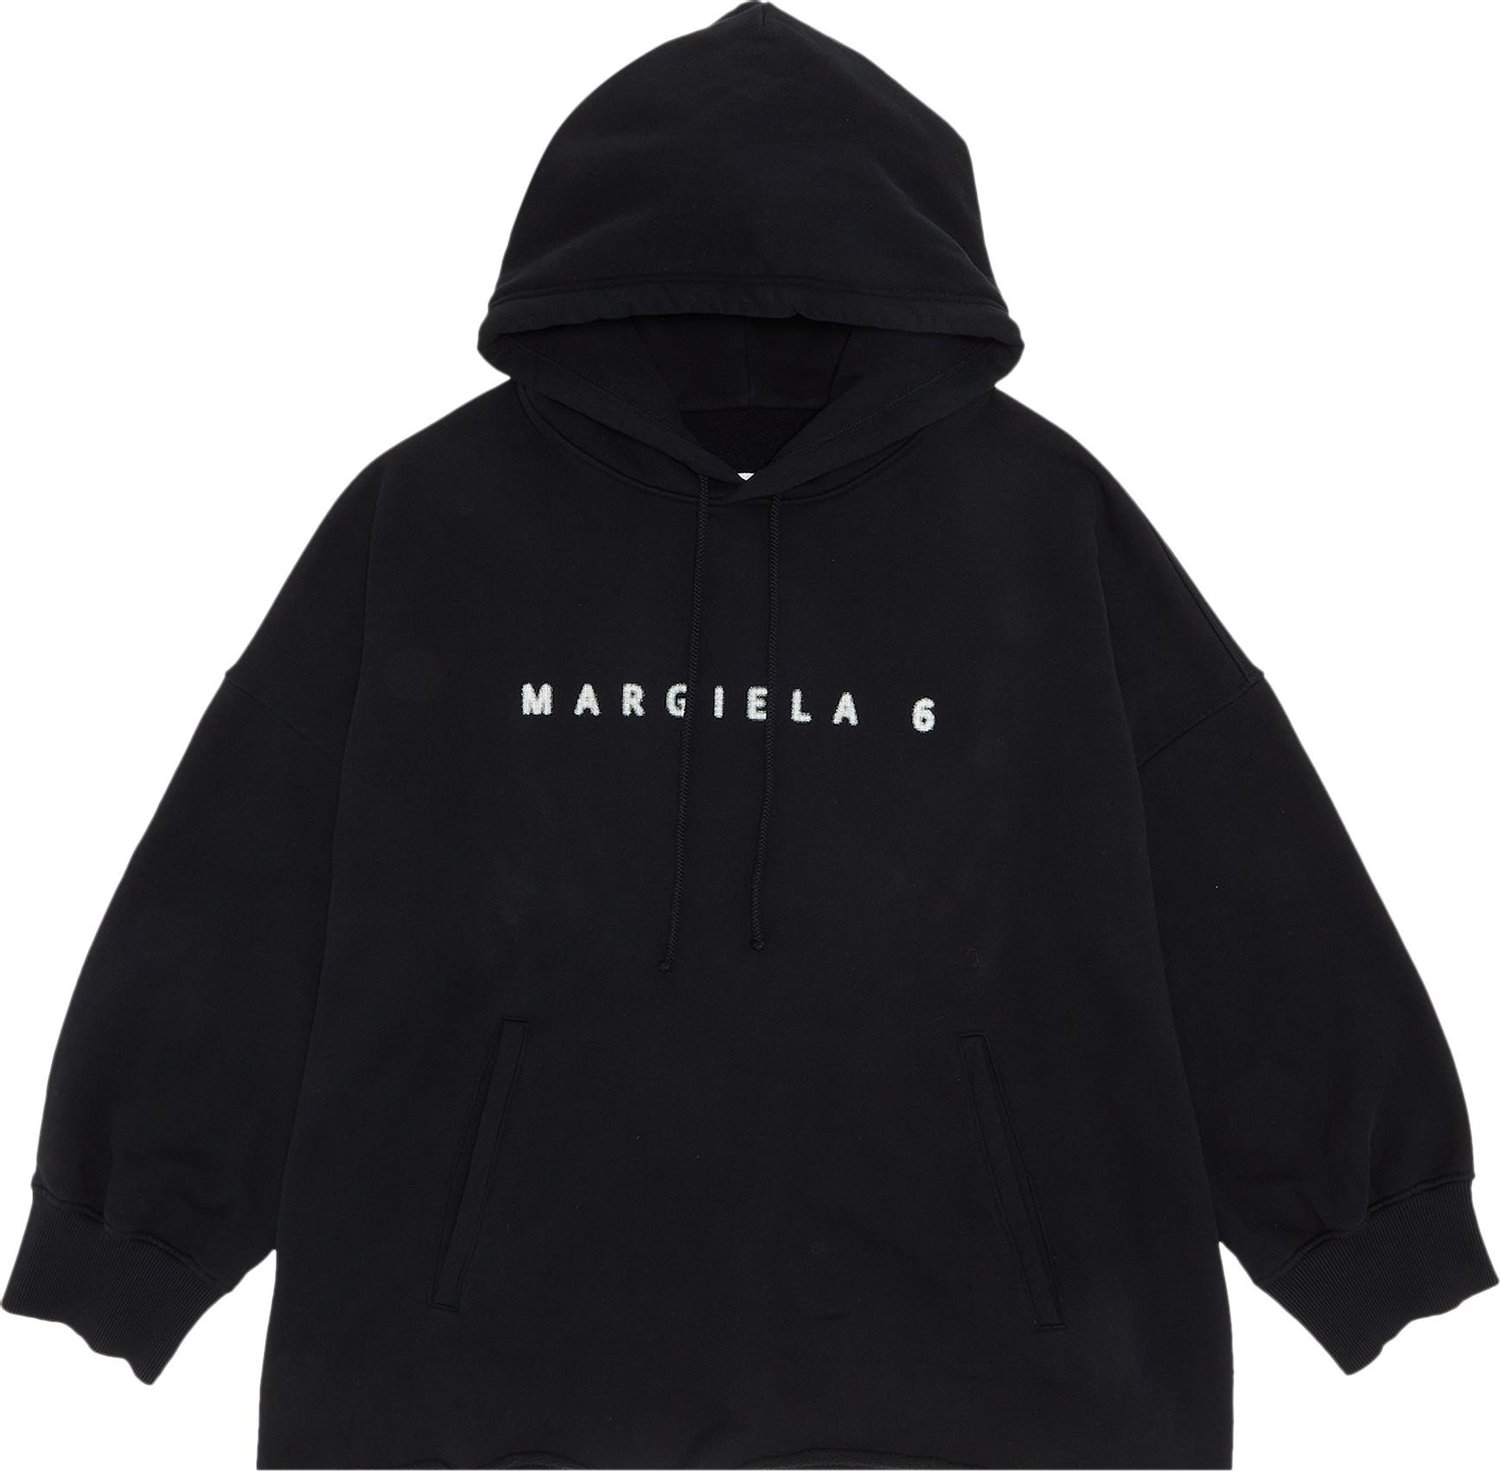 Buy MM6 Maison Margiela Hoodie 'Black' - S52GU0182 S25537 900 | GOAT